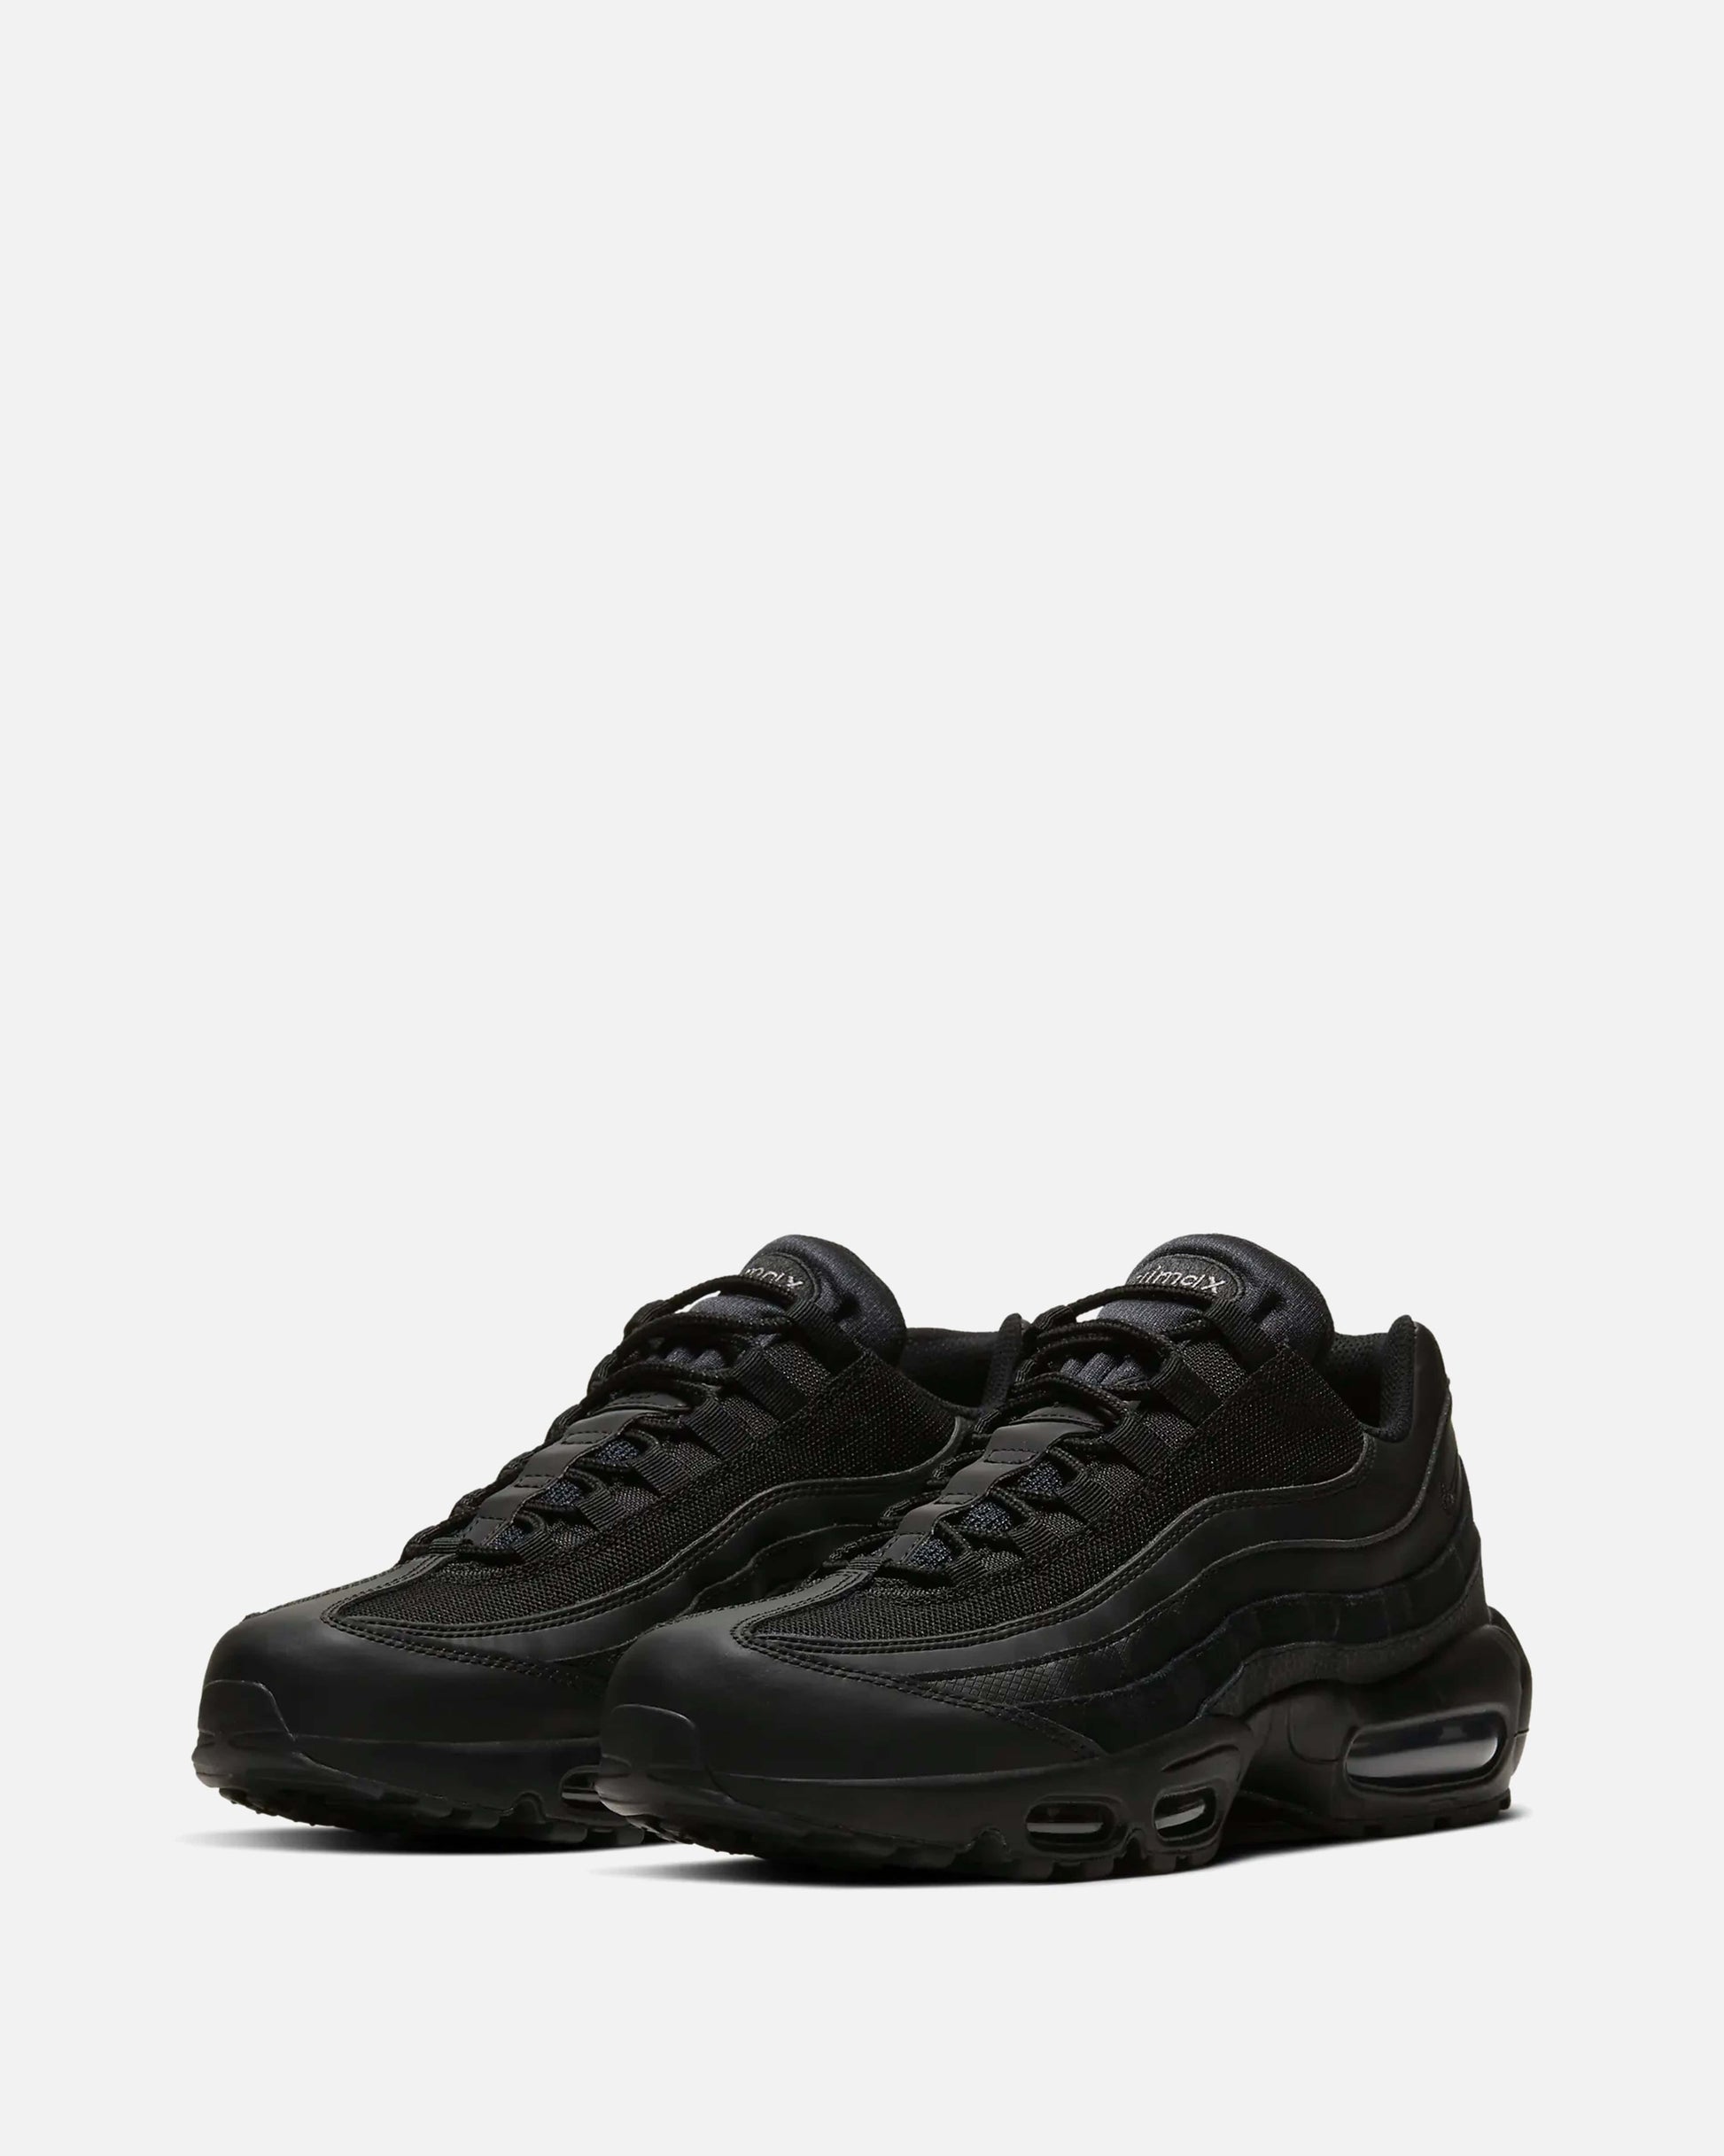 Nike Men's Shoes Air Max 95 Essential 'Black/Black-DarkGrey'